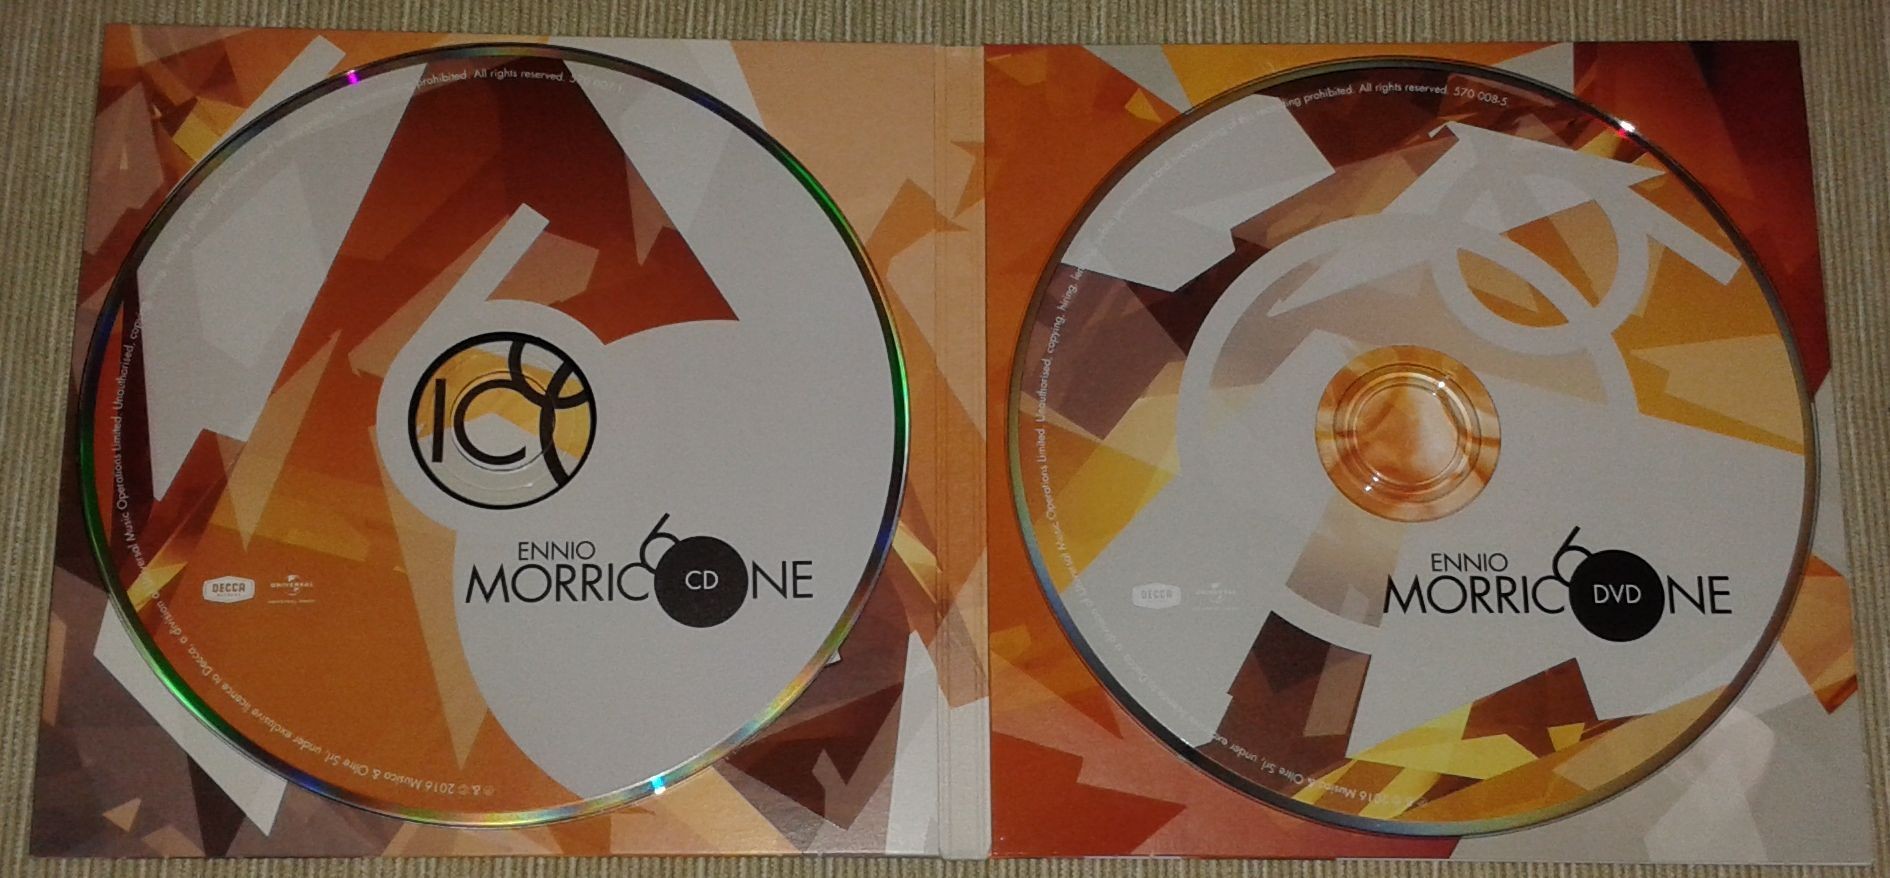 4. Ennio Morricone 60 Deluxe CD, DVD środek z płytami Universal.jpg